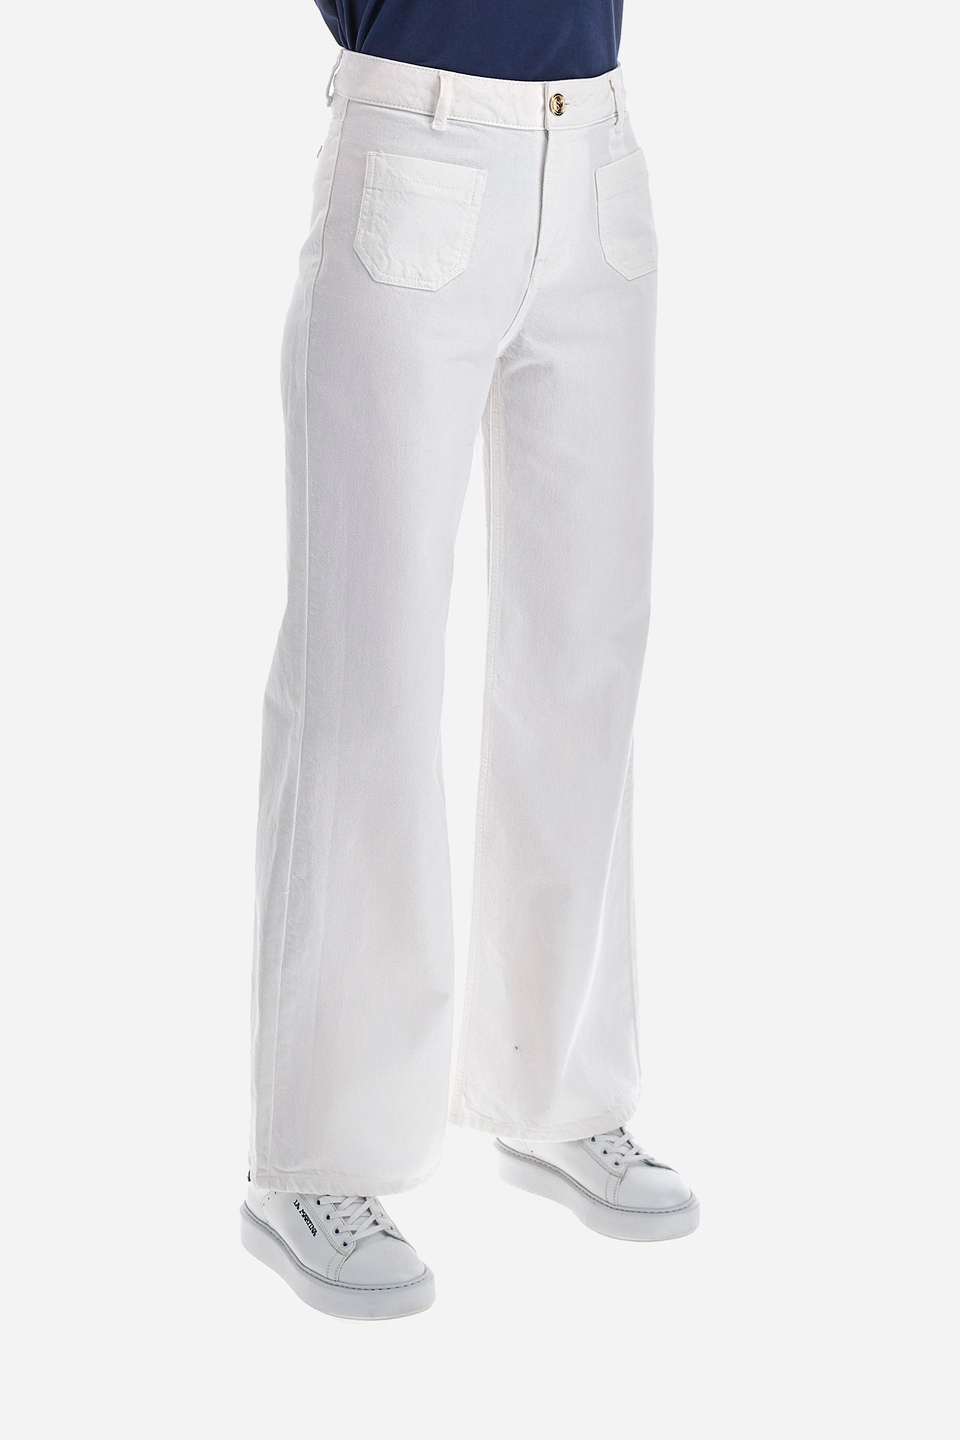 Buy Naari Women Cream Coloured Slim Fit Solid Cigarette Trousers - Trousers  for Women 7761581 | Myntra